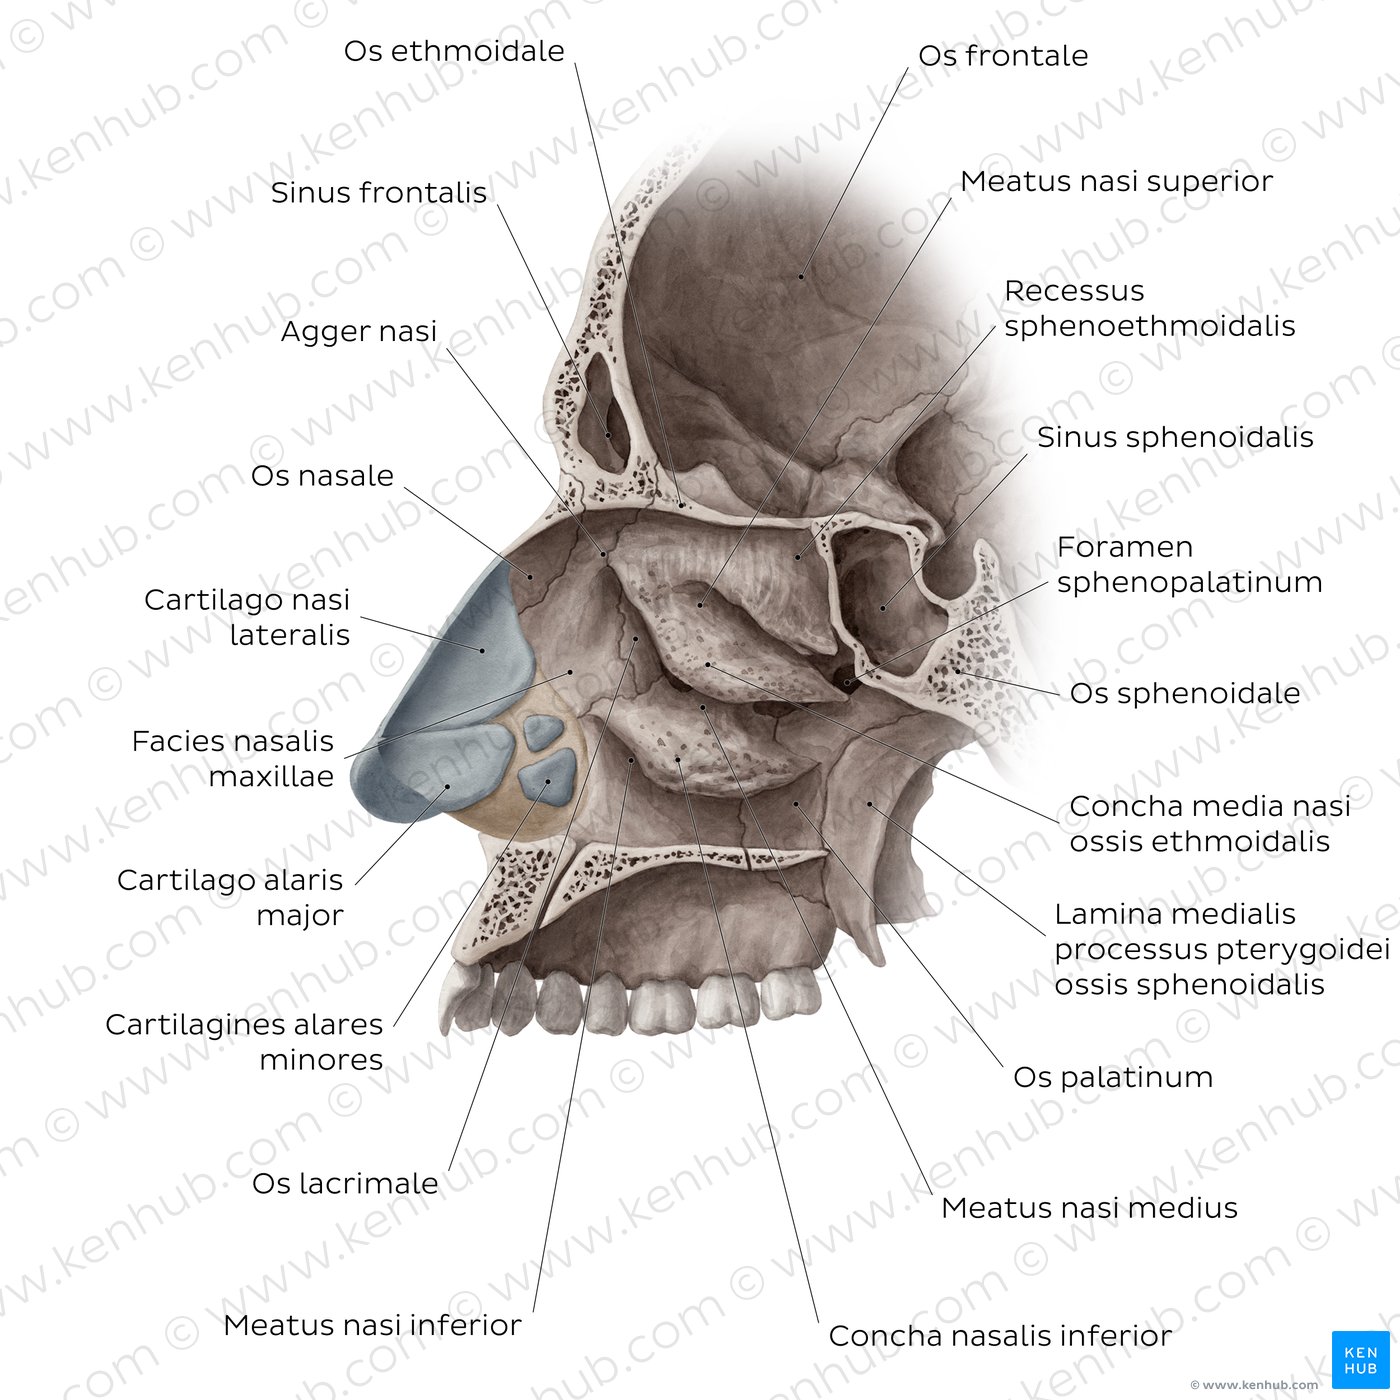 Lateral wall of the nasal cavity